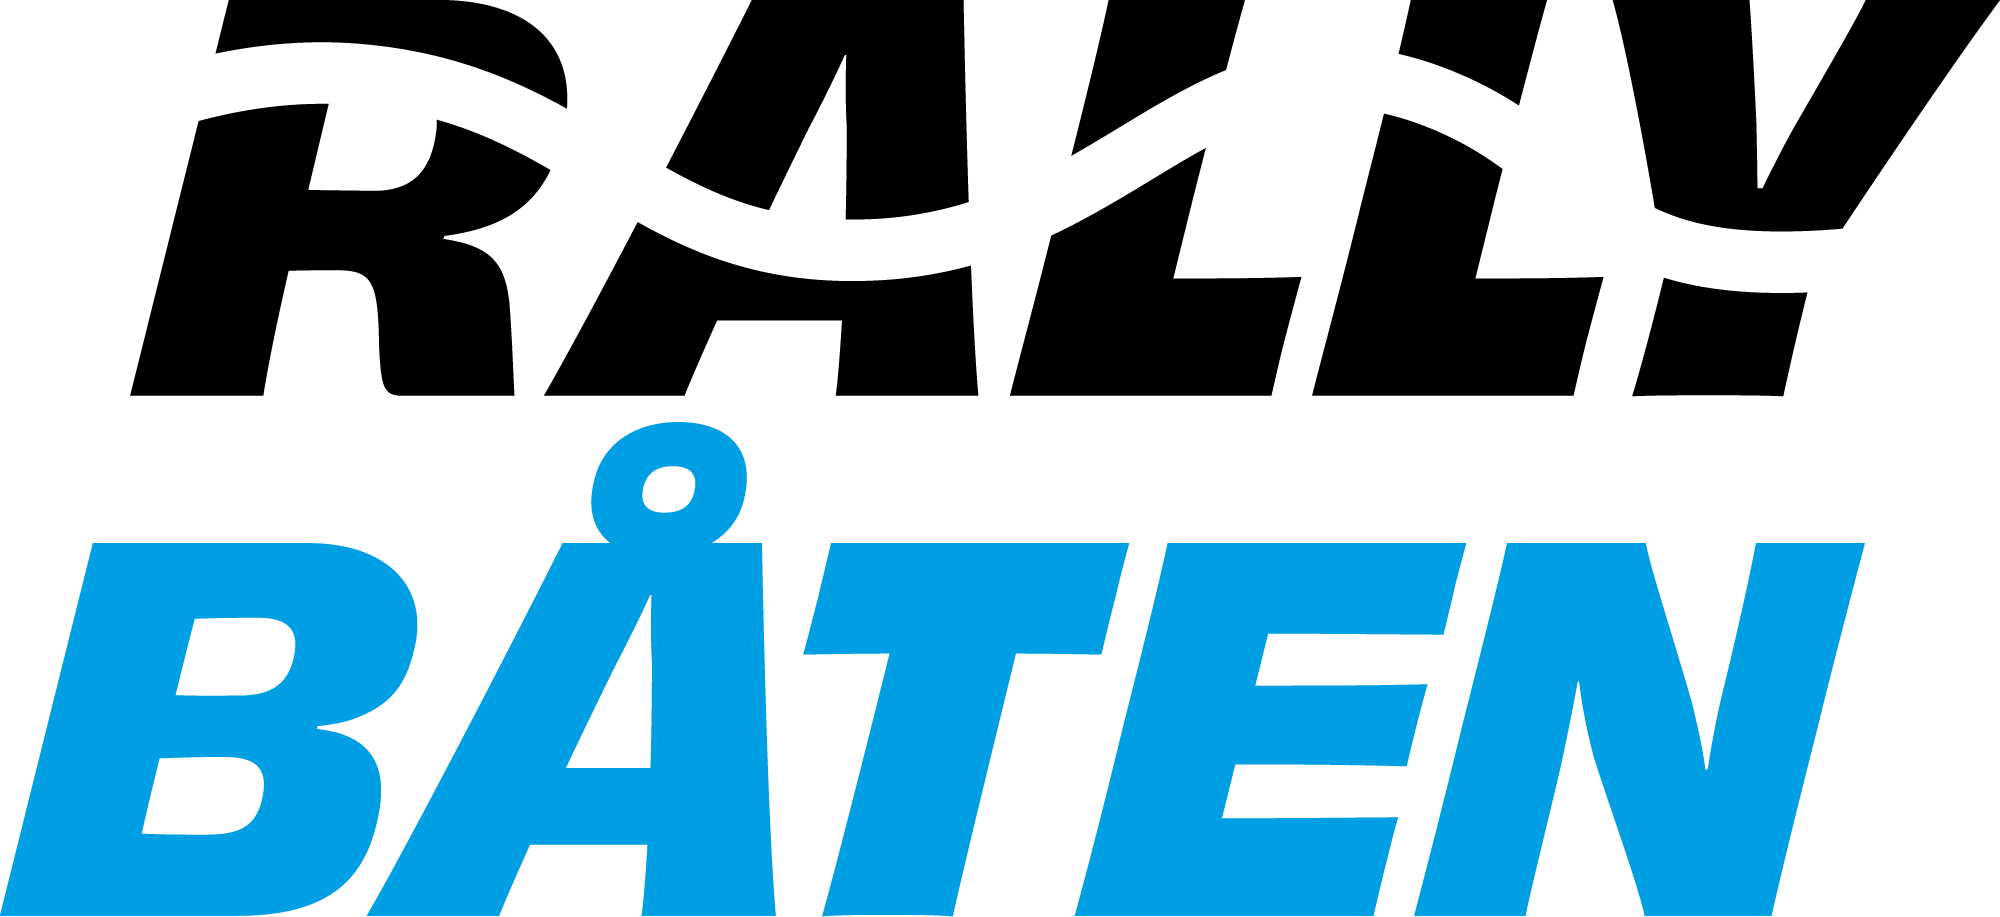 Rallybåten logotyp